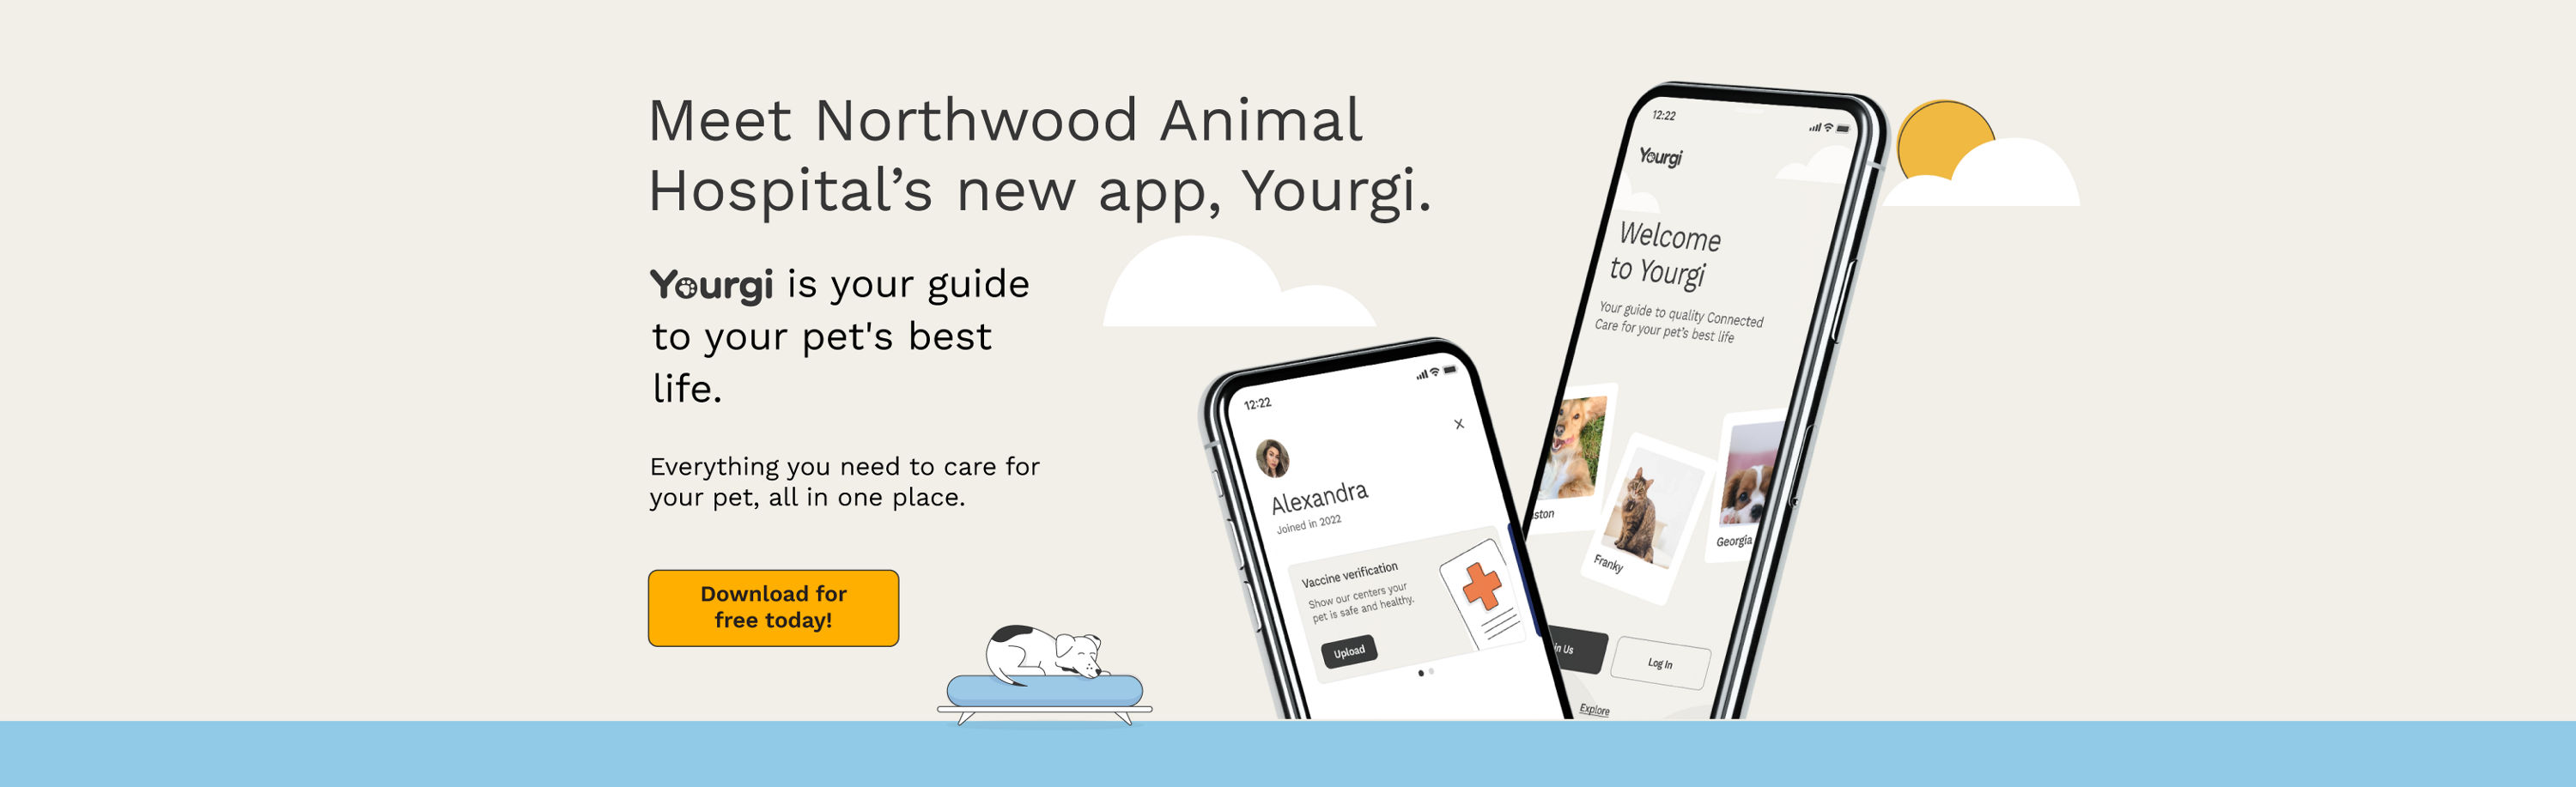 Meet Northwood Animal Hospital's new app, Yourgi.